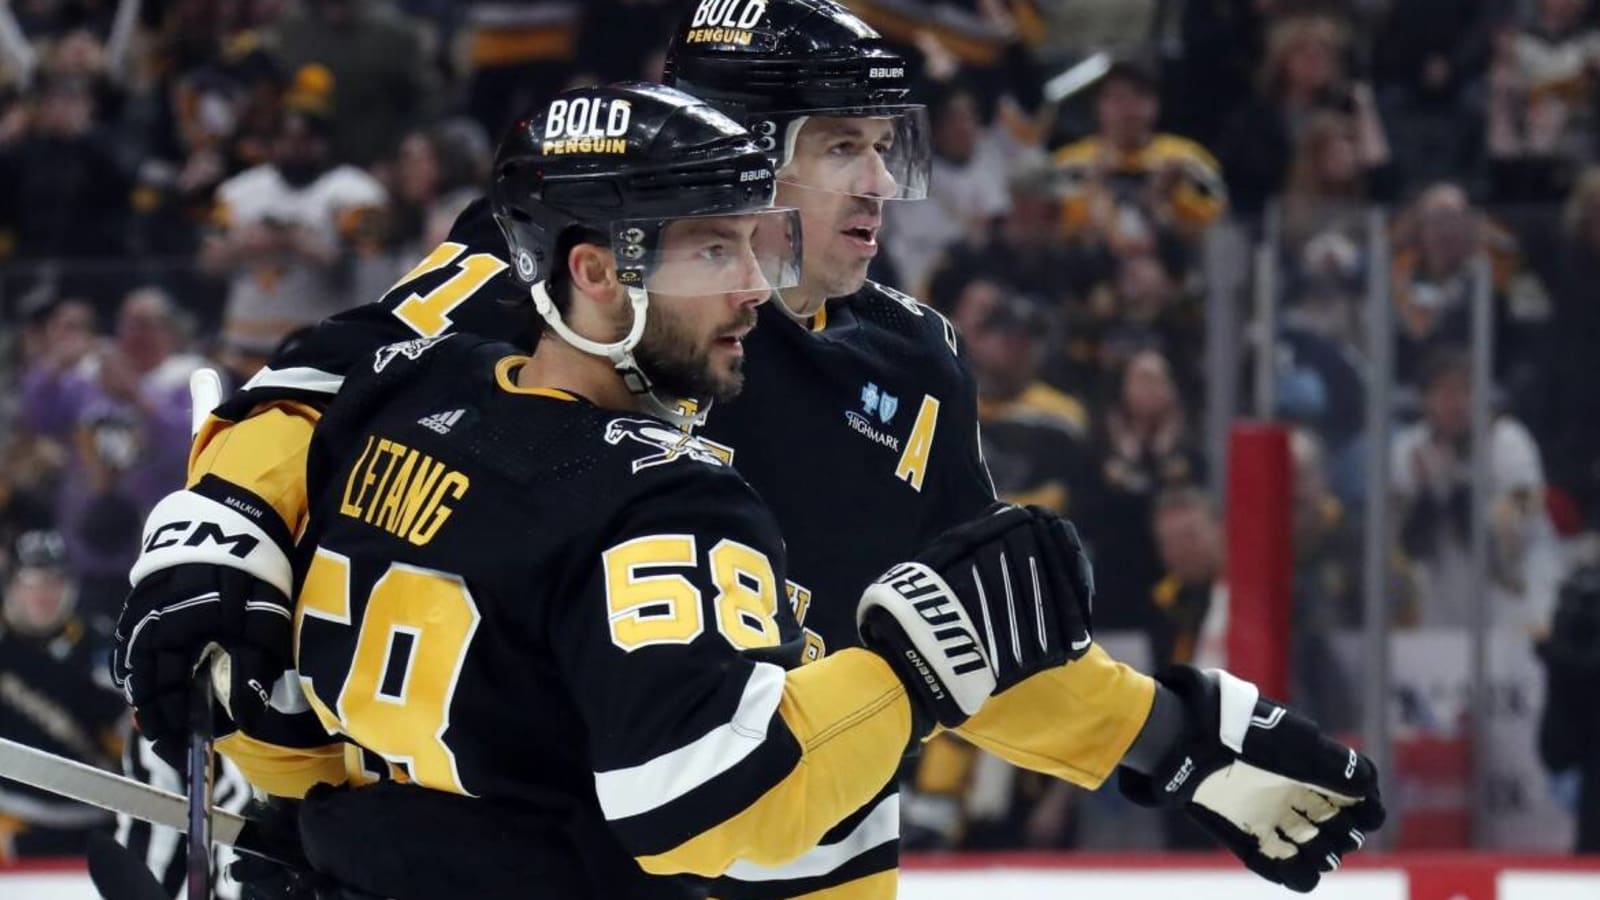 Kris Letang Dominates in Penguins Win Over Canadians